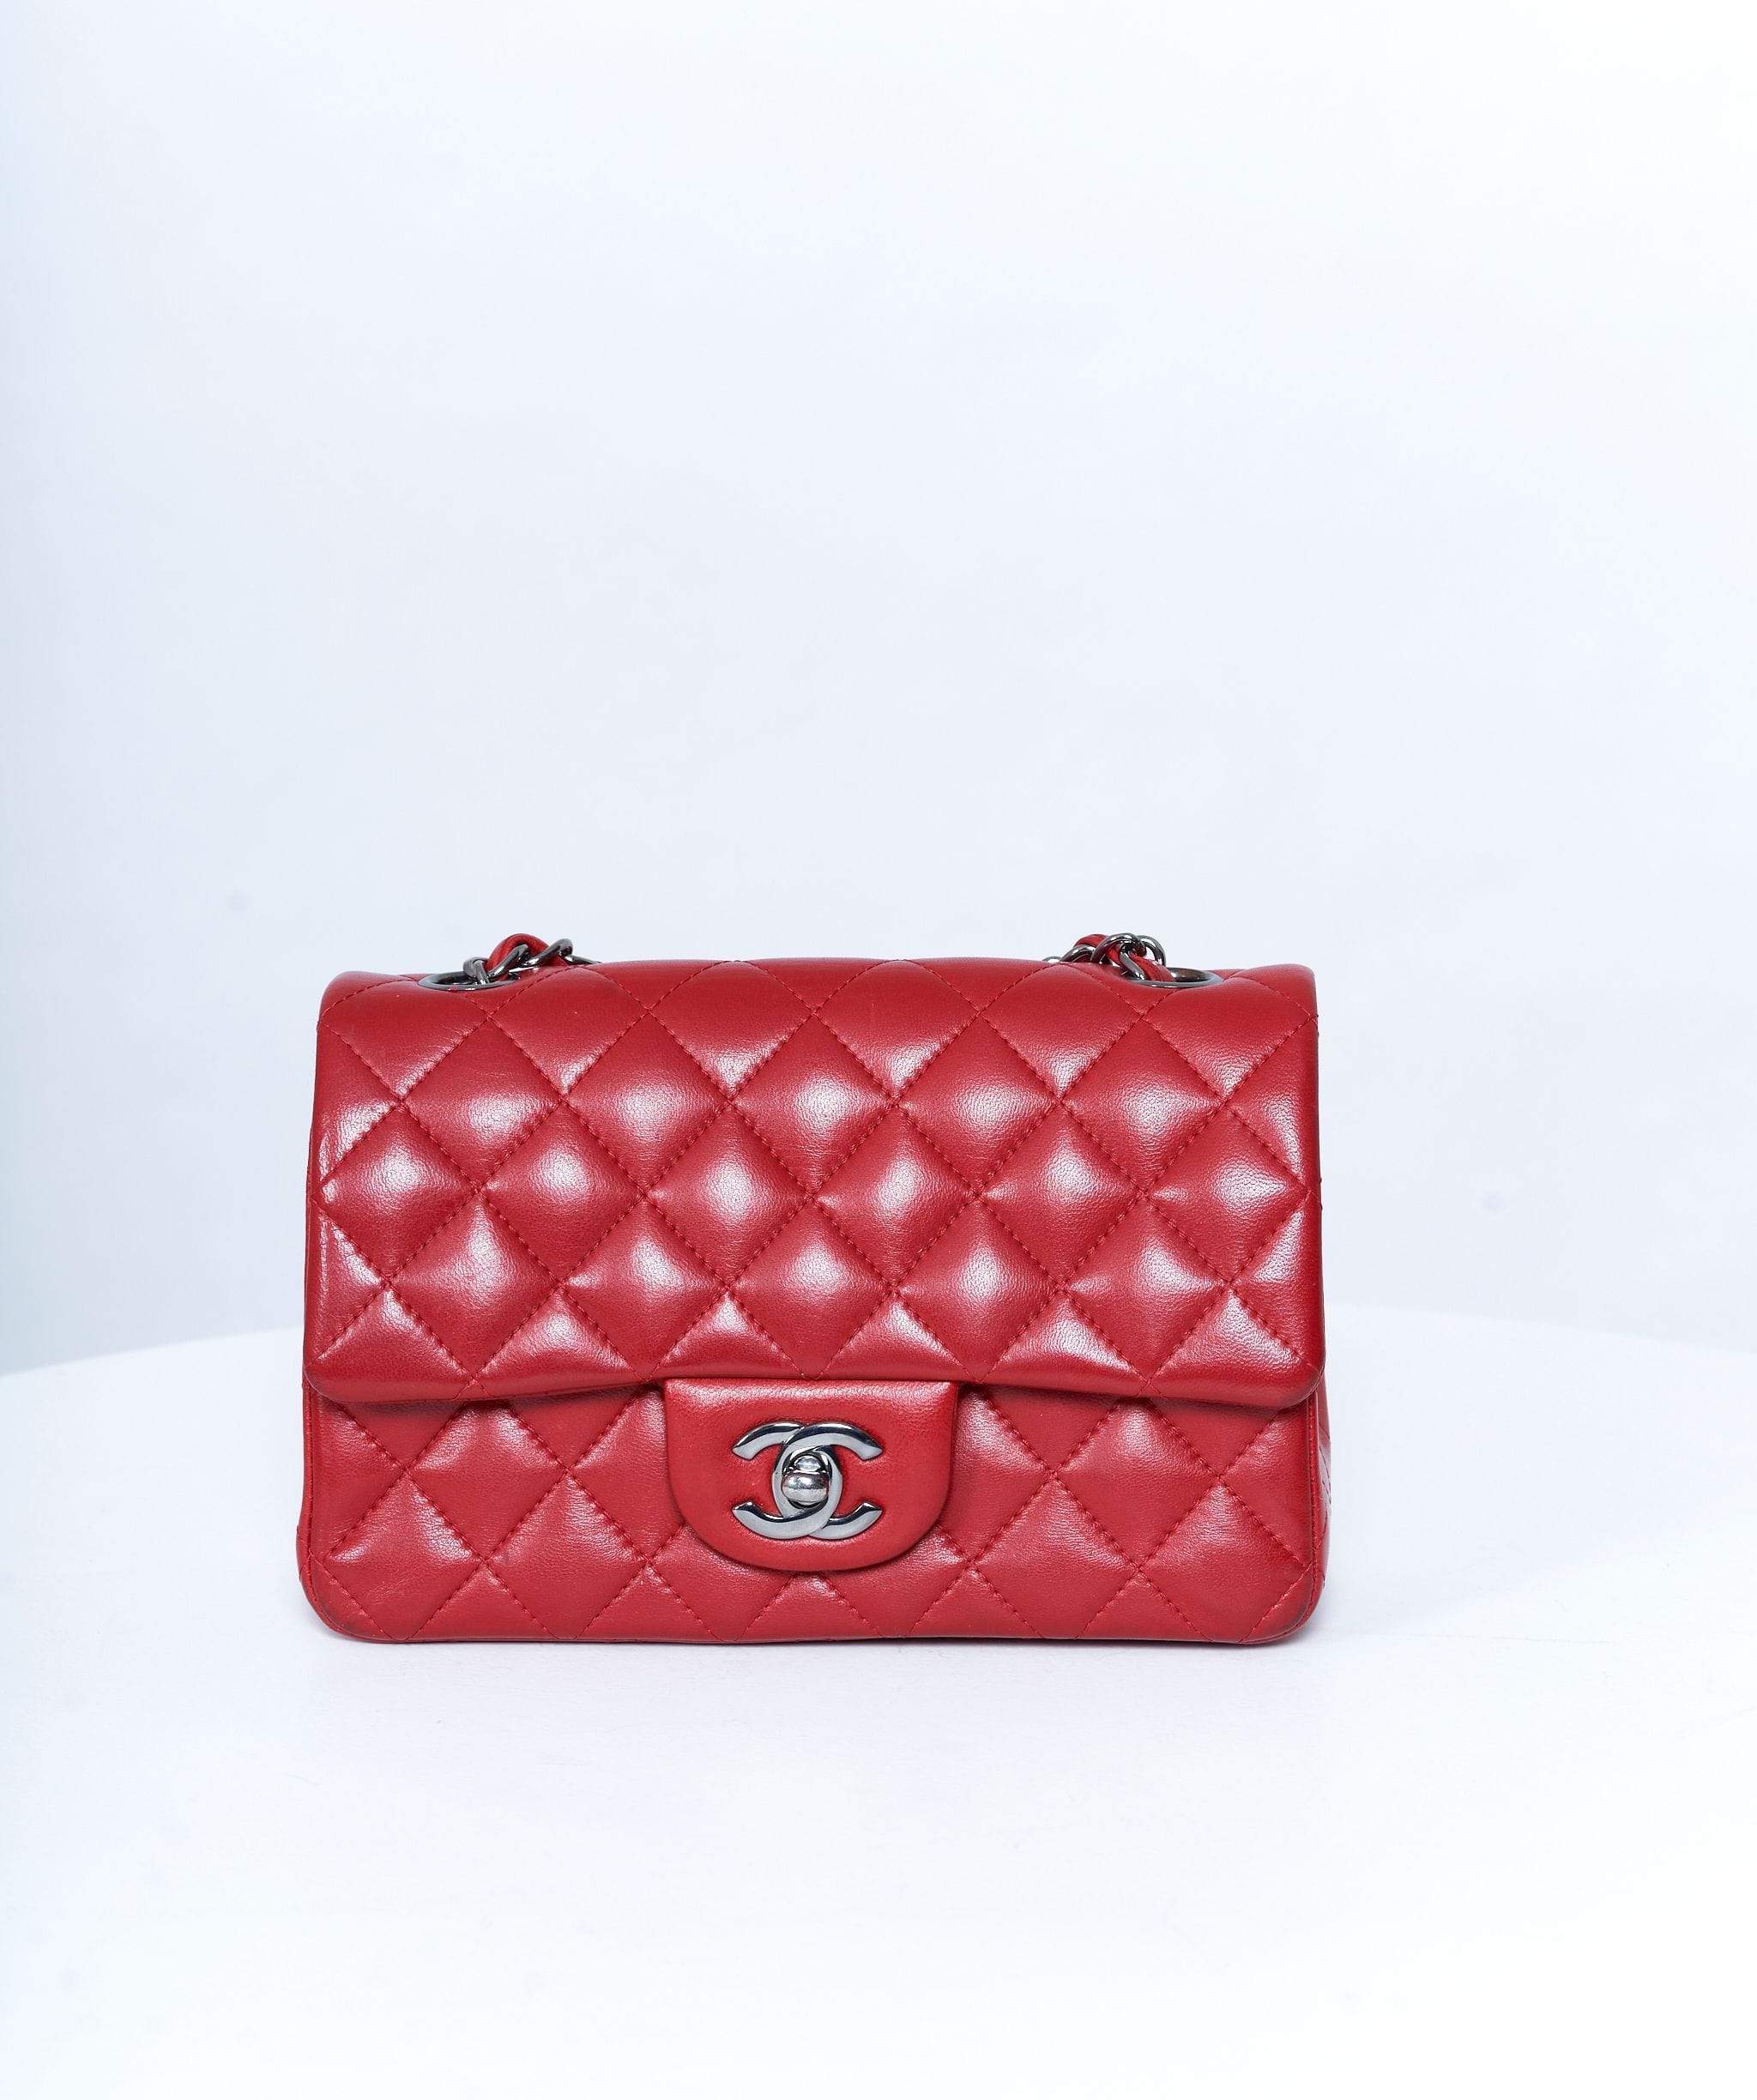 Chanel Red Lambskin Small 8' Classic Flap Bag Ruthenium Hardware